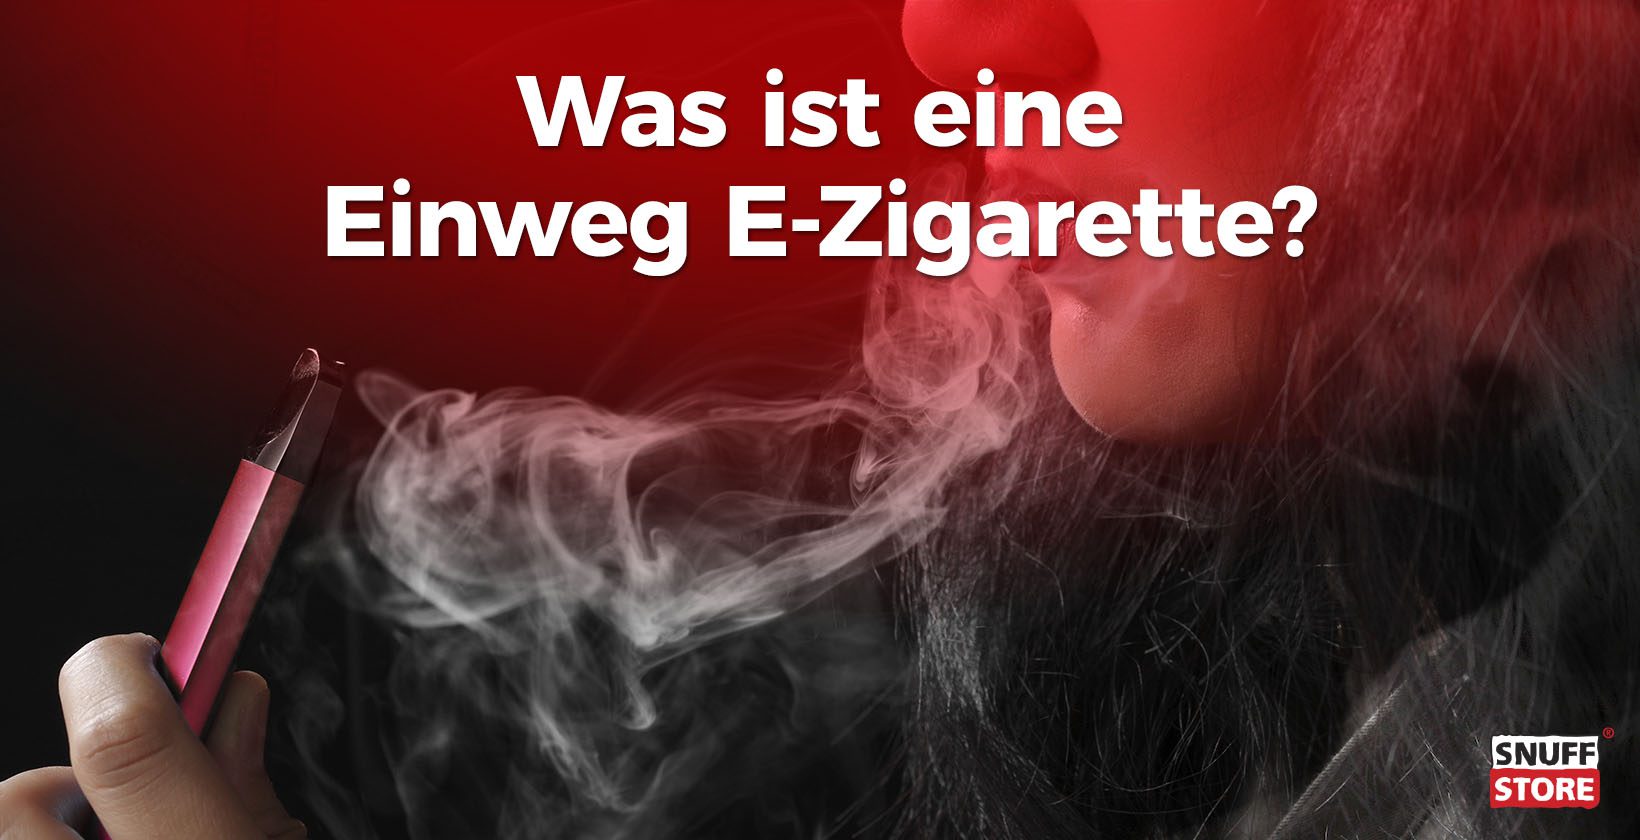 Einweg E-Zigarette Difinition